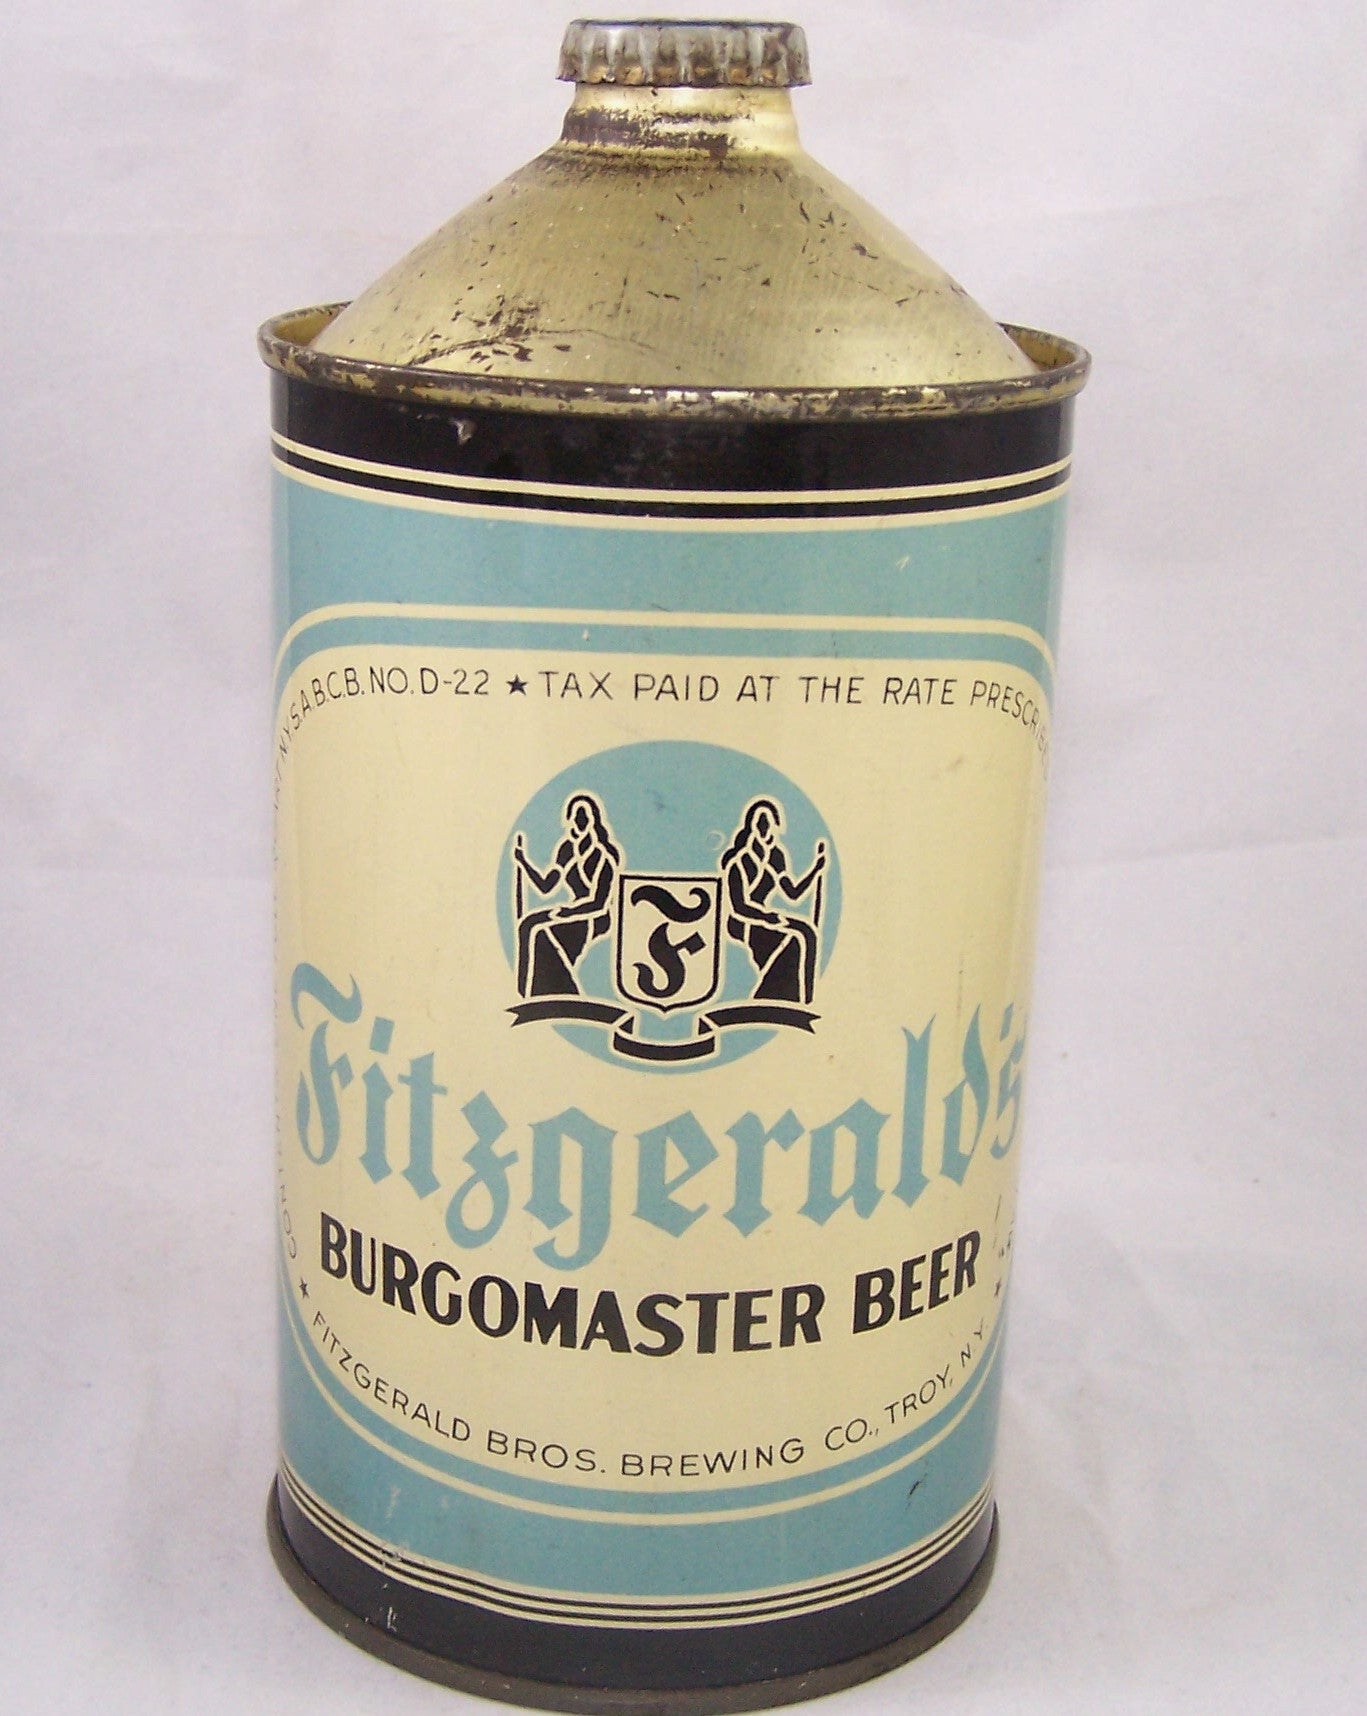 Fitzgerald's Burgomaster Beer, USBC 209-14, Grade 1/1+ Sold on 06/27/17